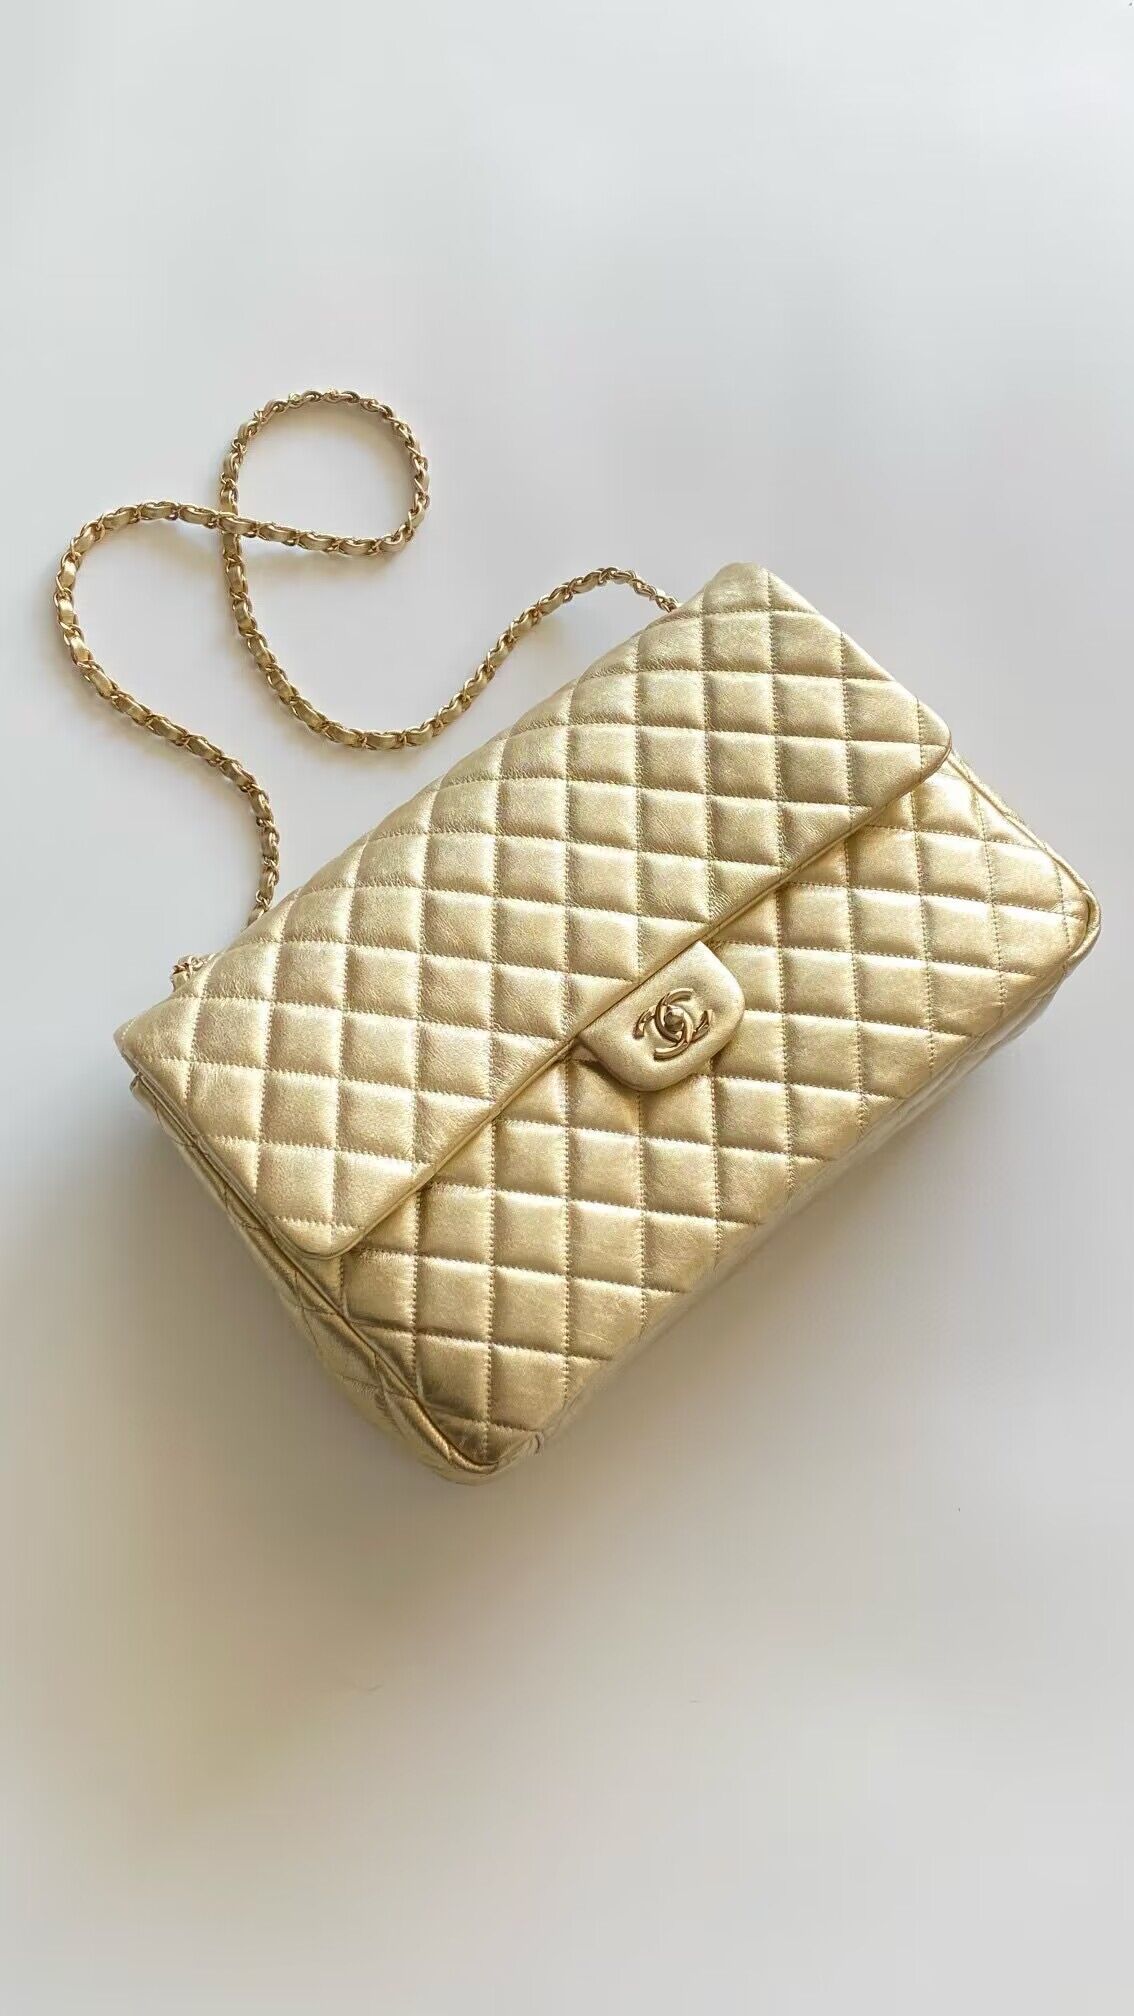 Chanel LARGE 2.55 HANDBAG AS4661 Gold